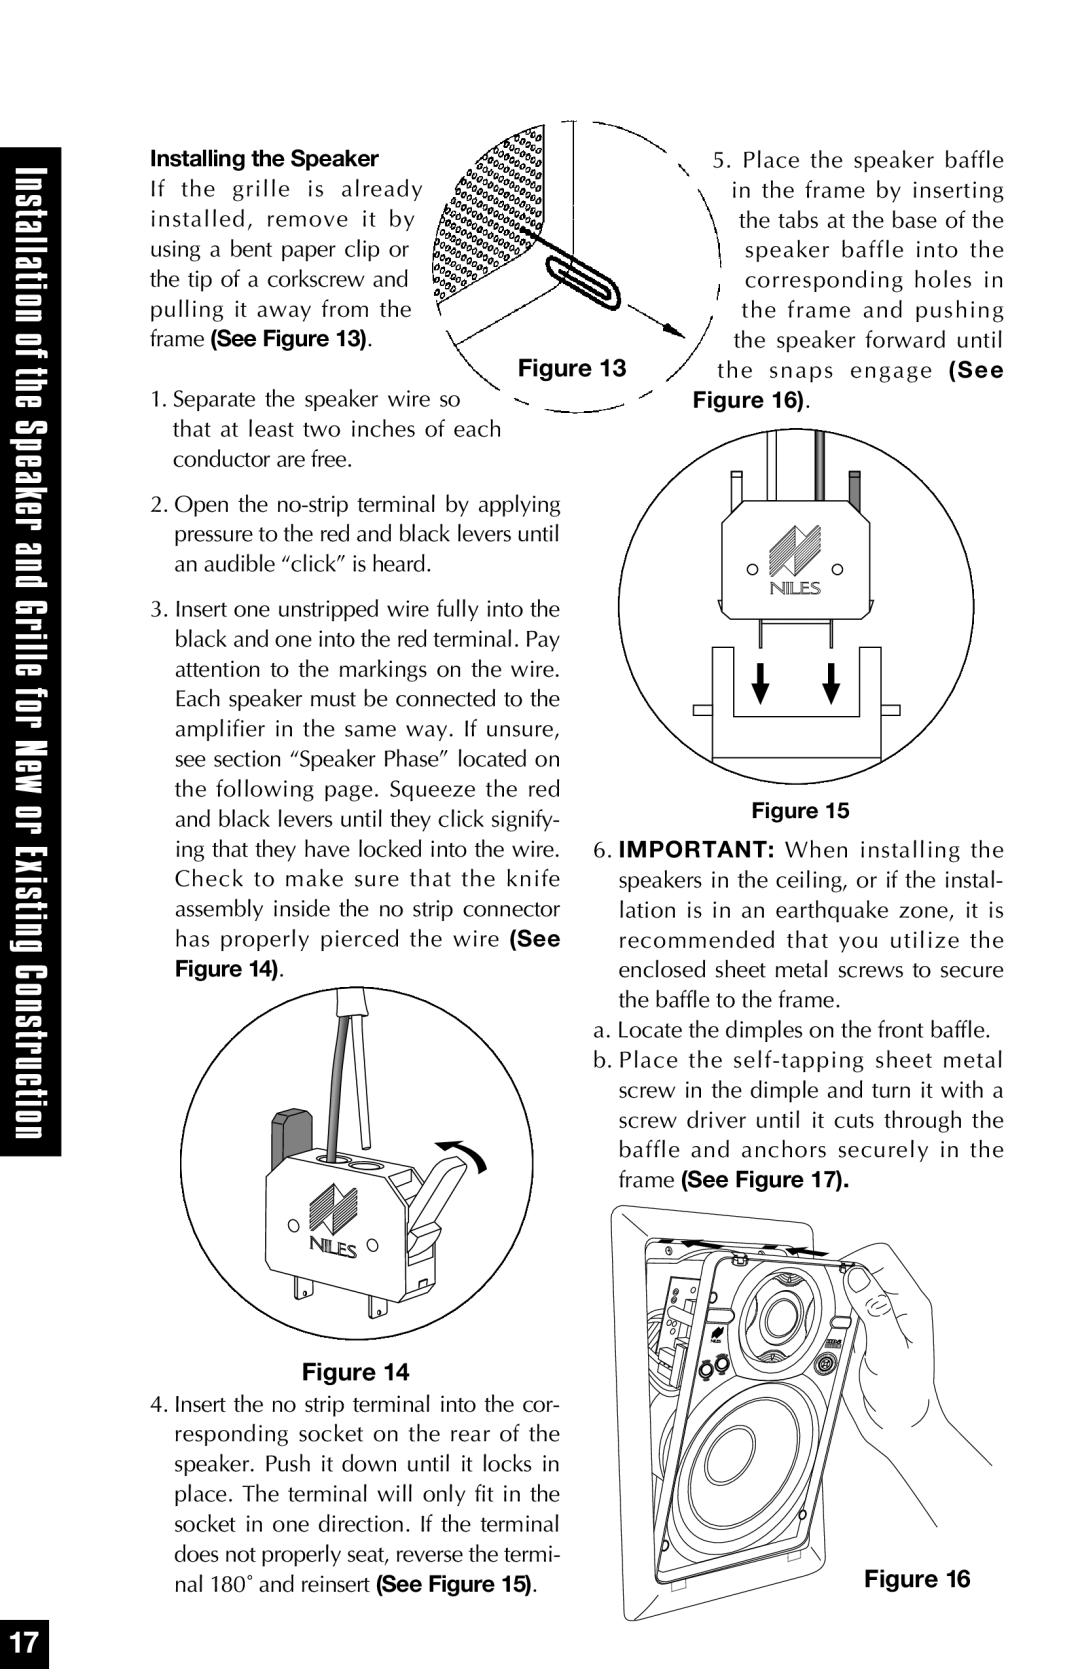 Niles Audio PR6, PR5 manual Installing the Speaker, frame See Figure 